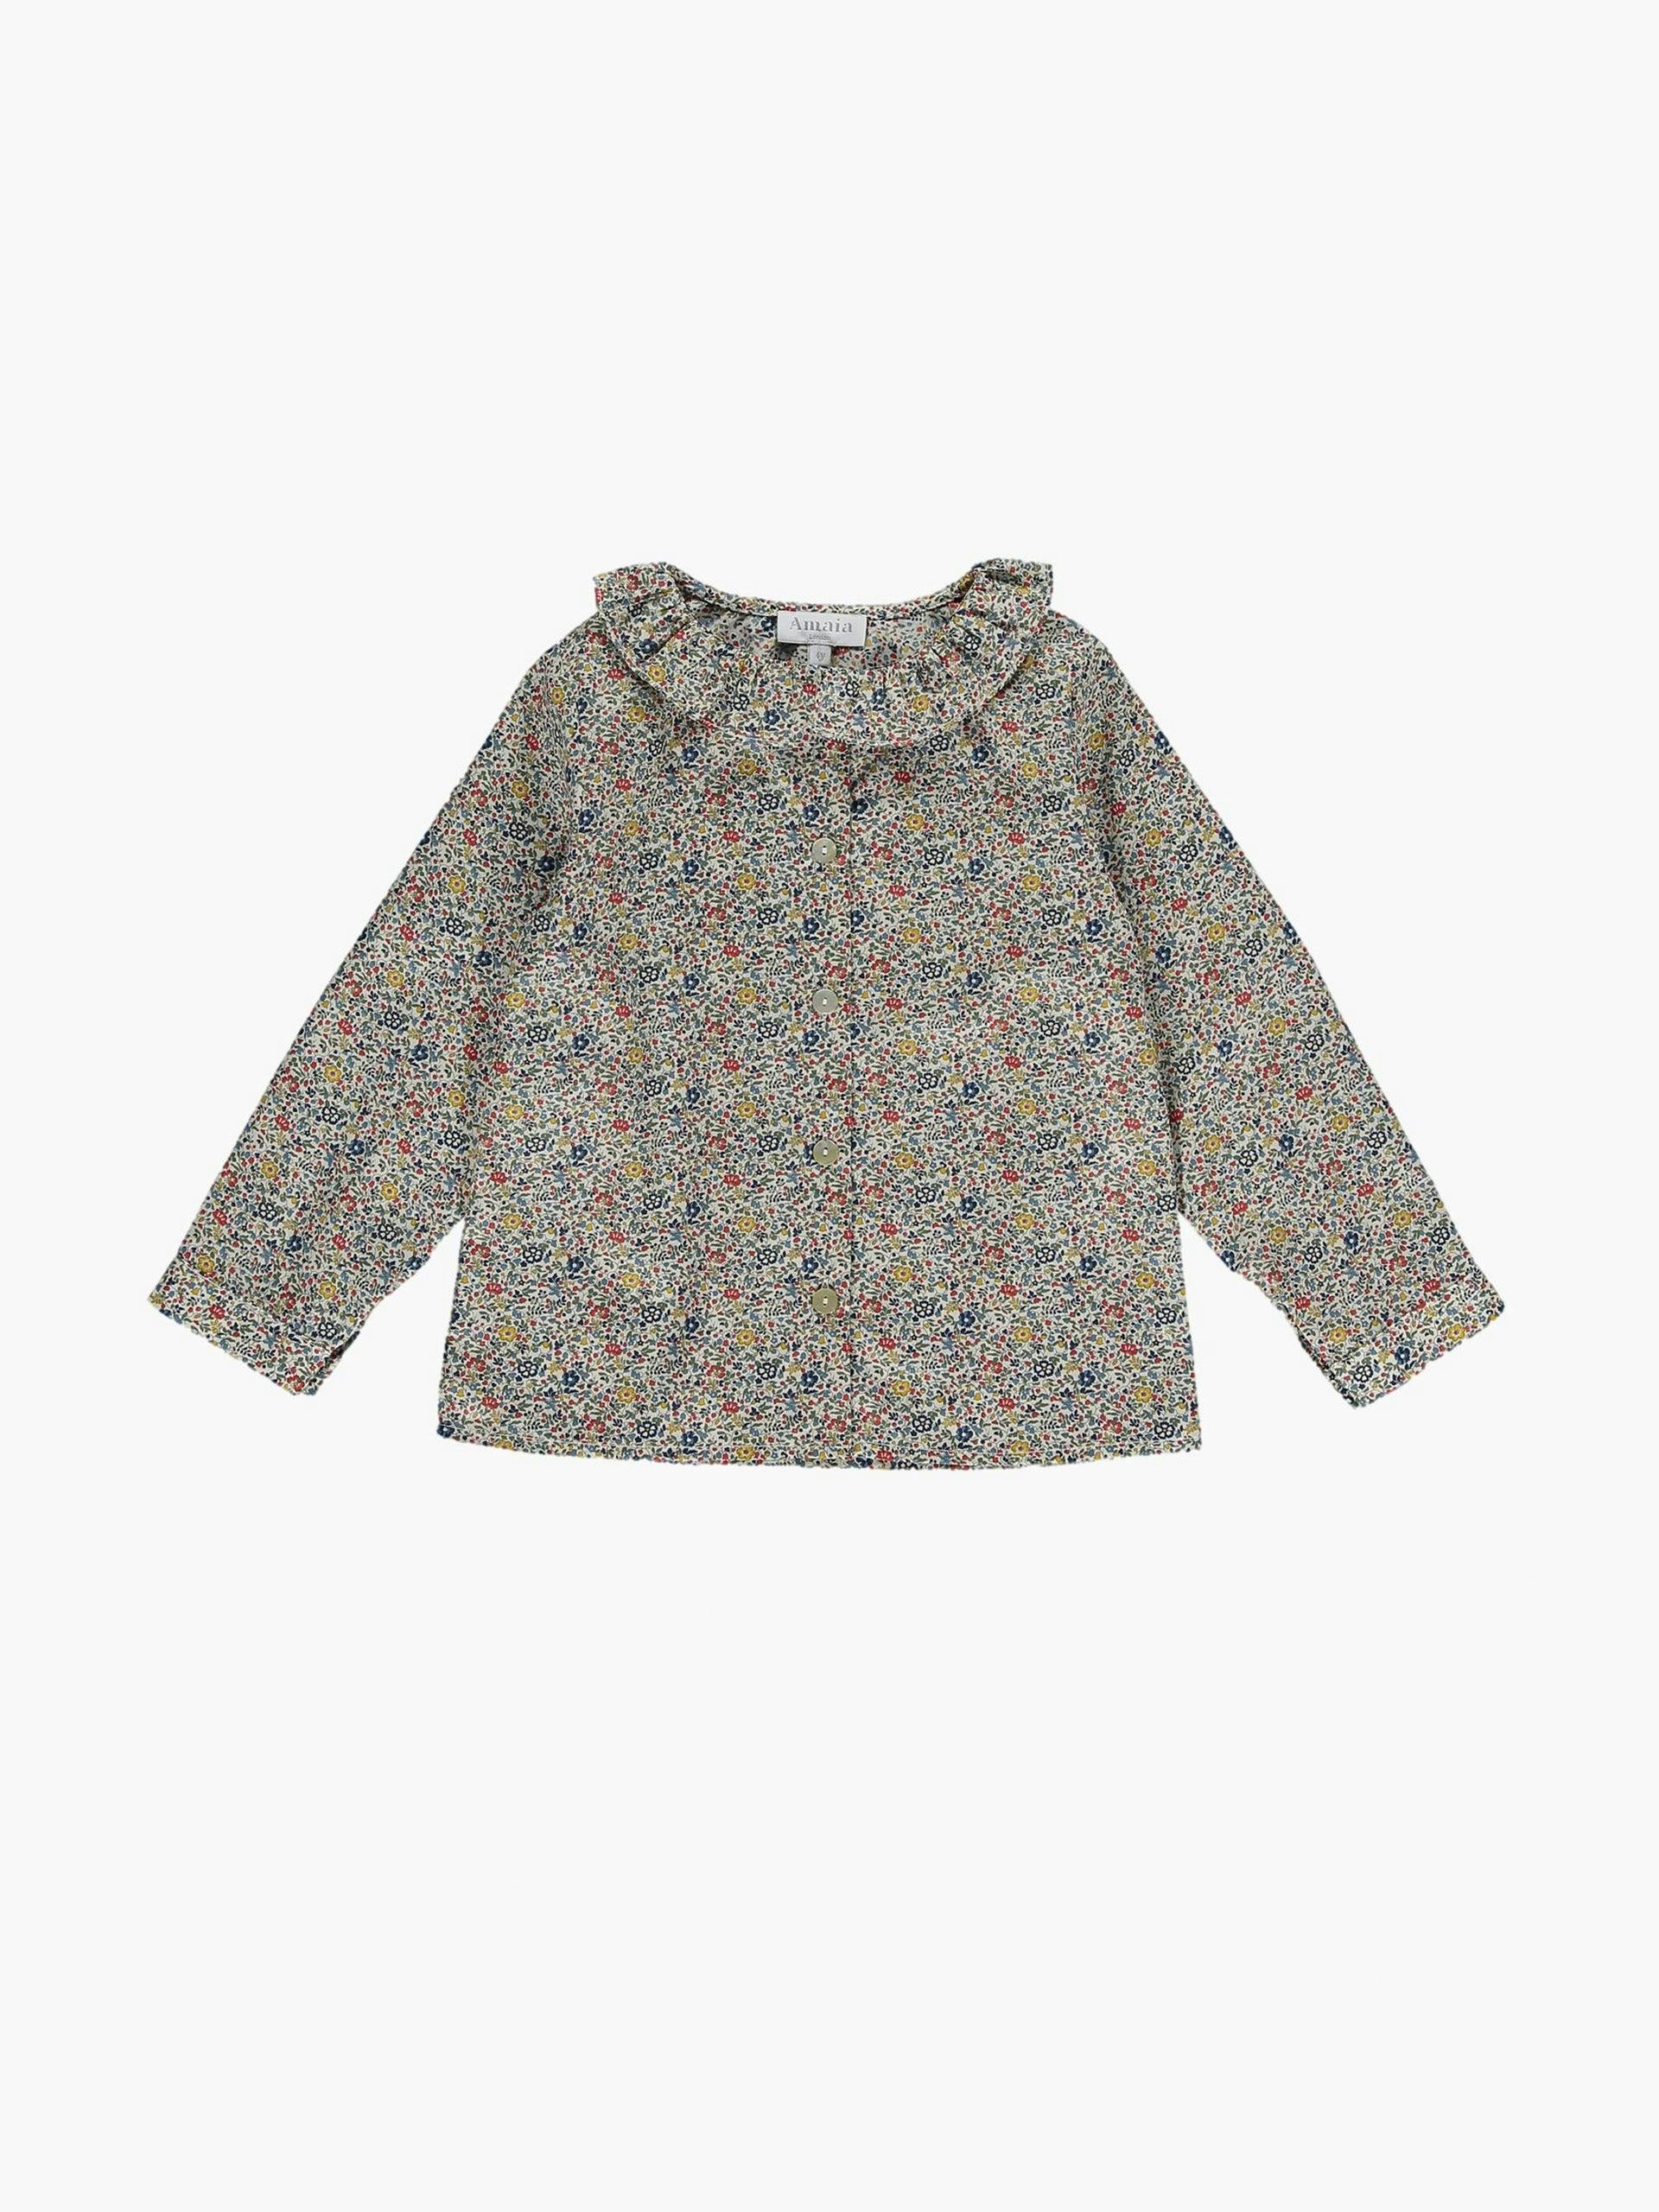 Amelia Liberty print blouse